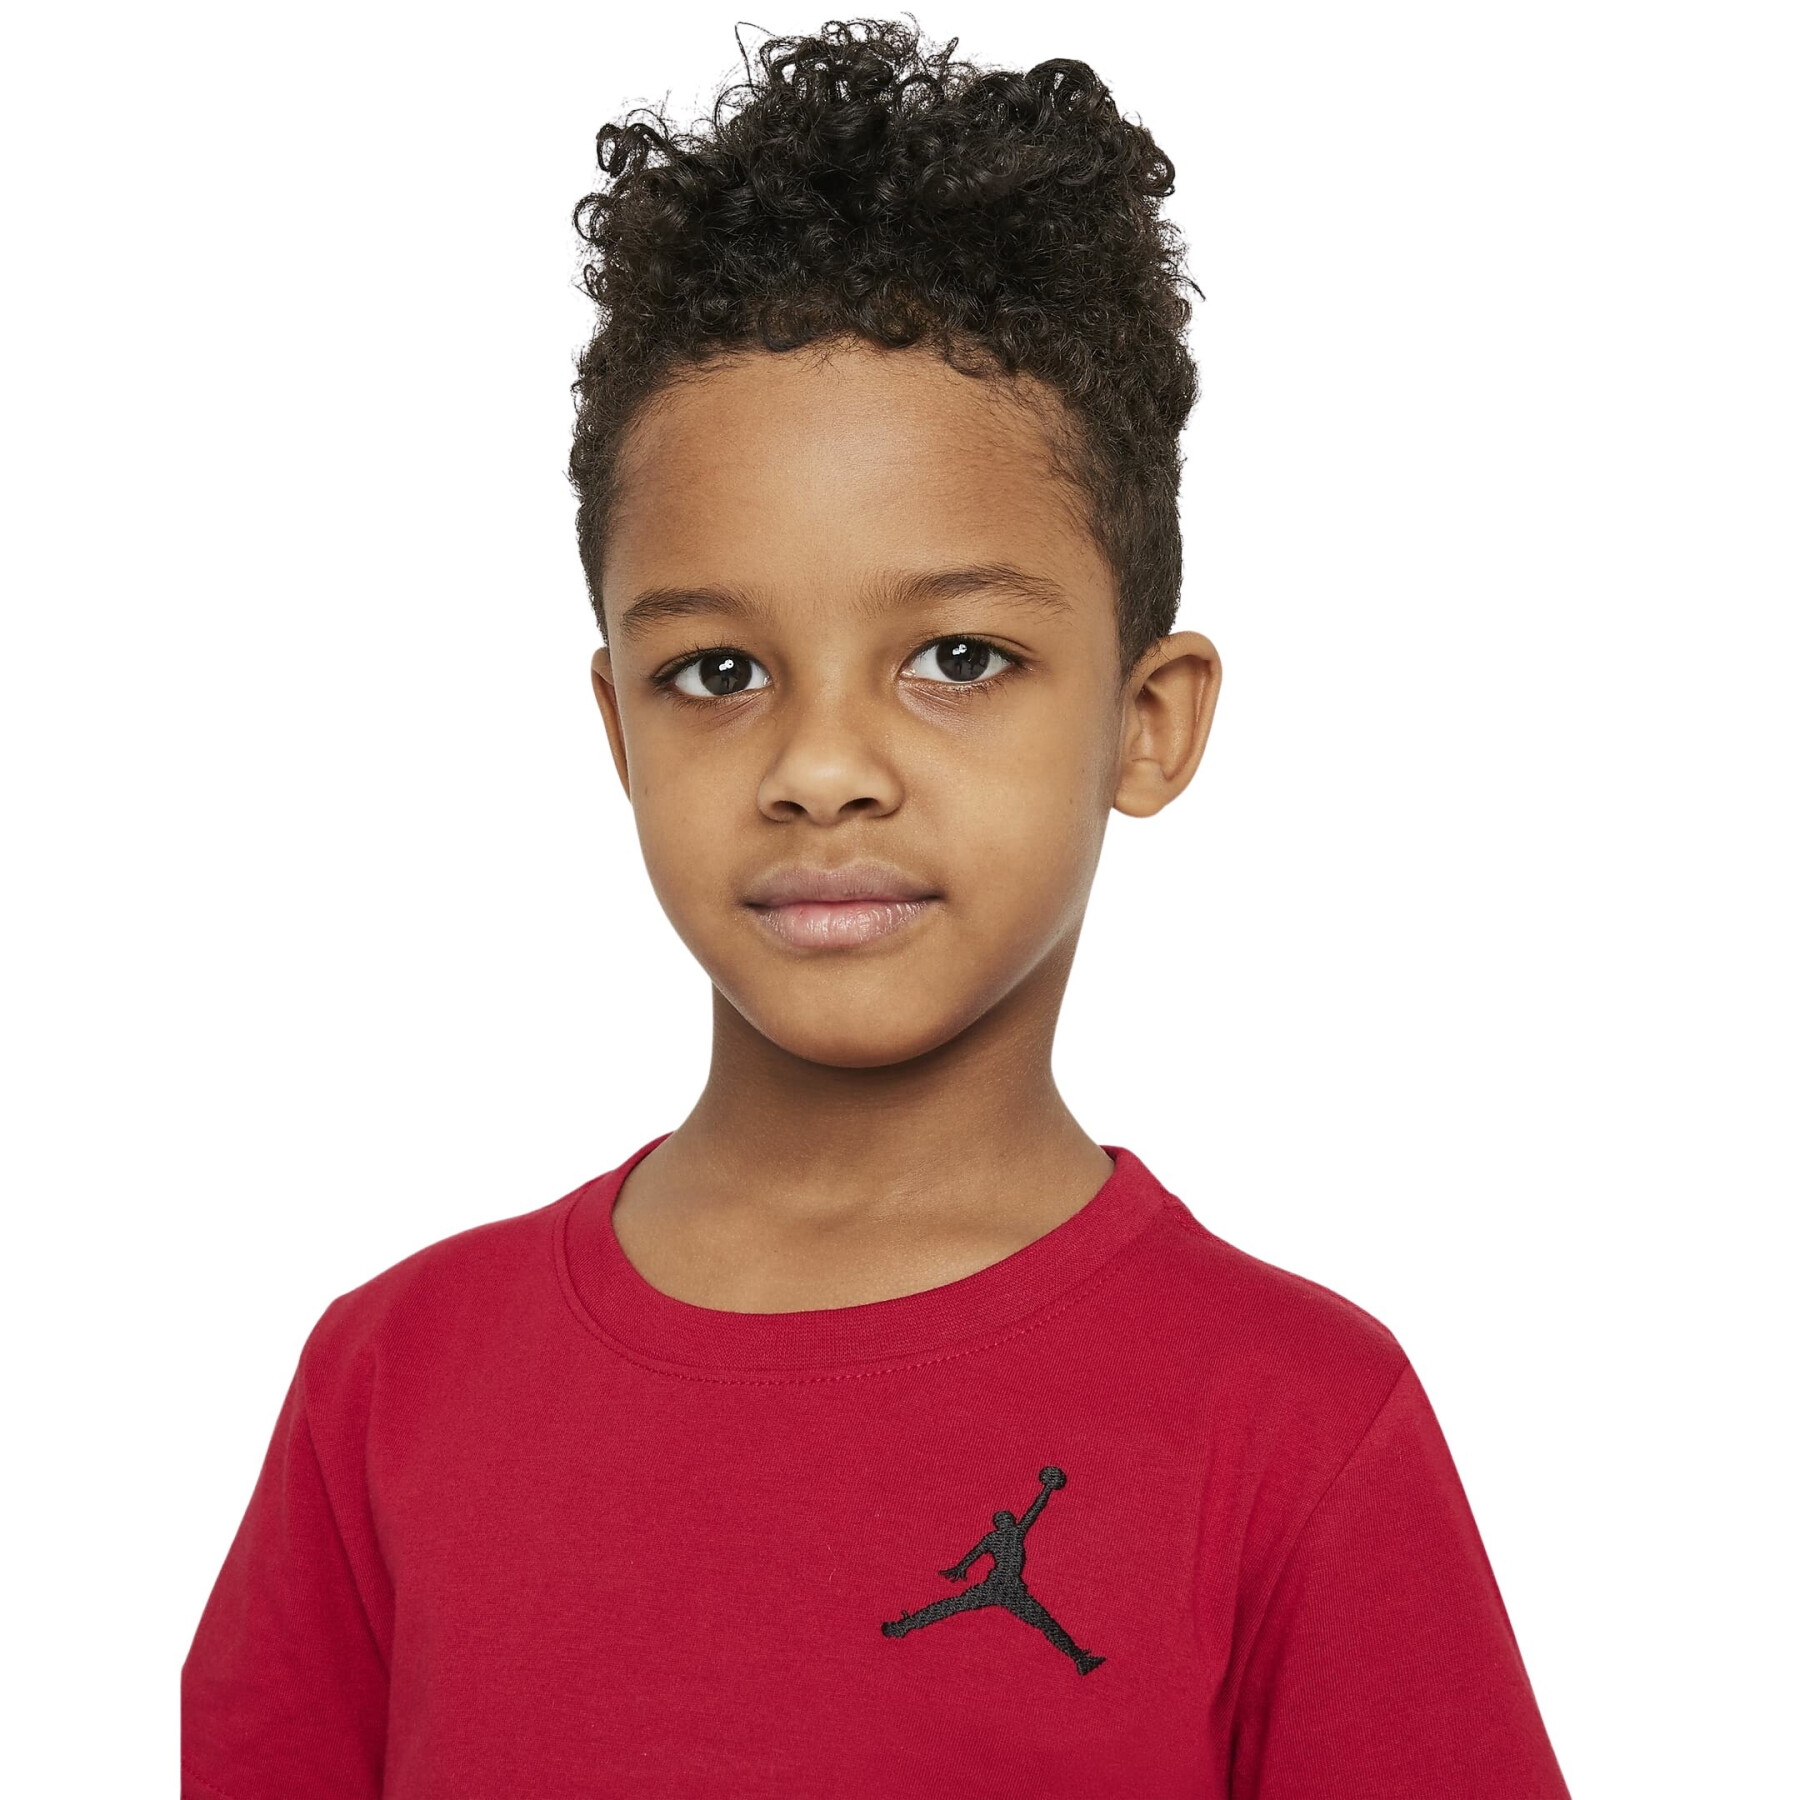 Kinder T-Shirt Jordan Jumpman Air EMB